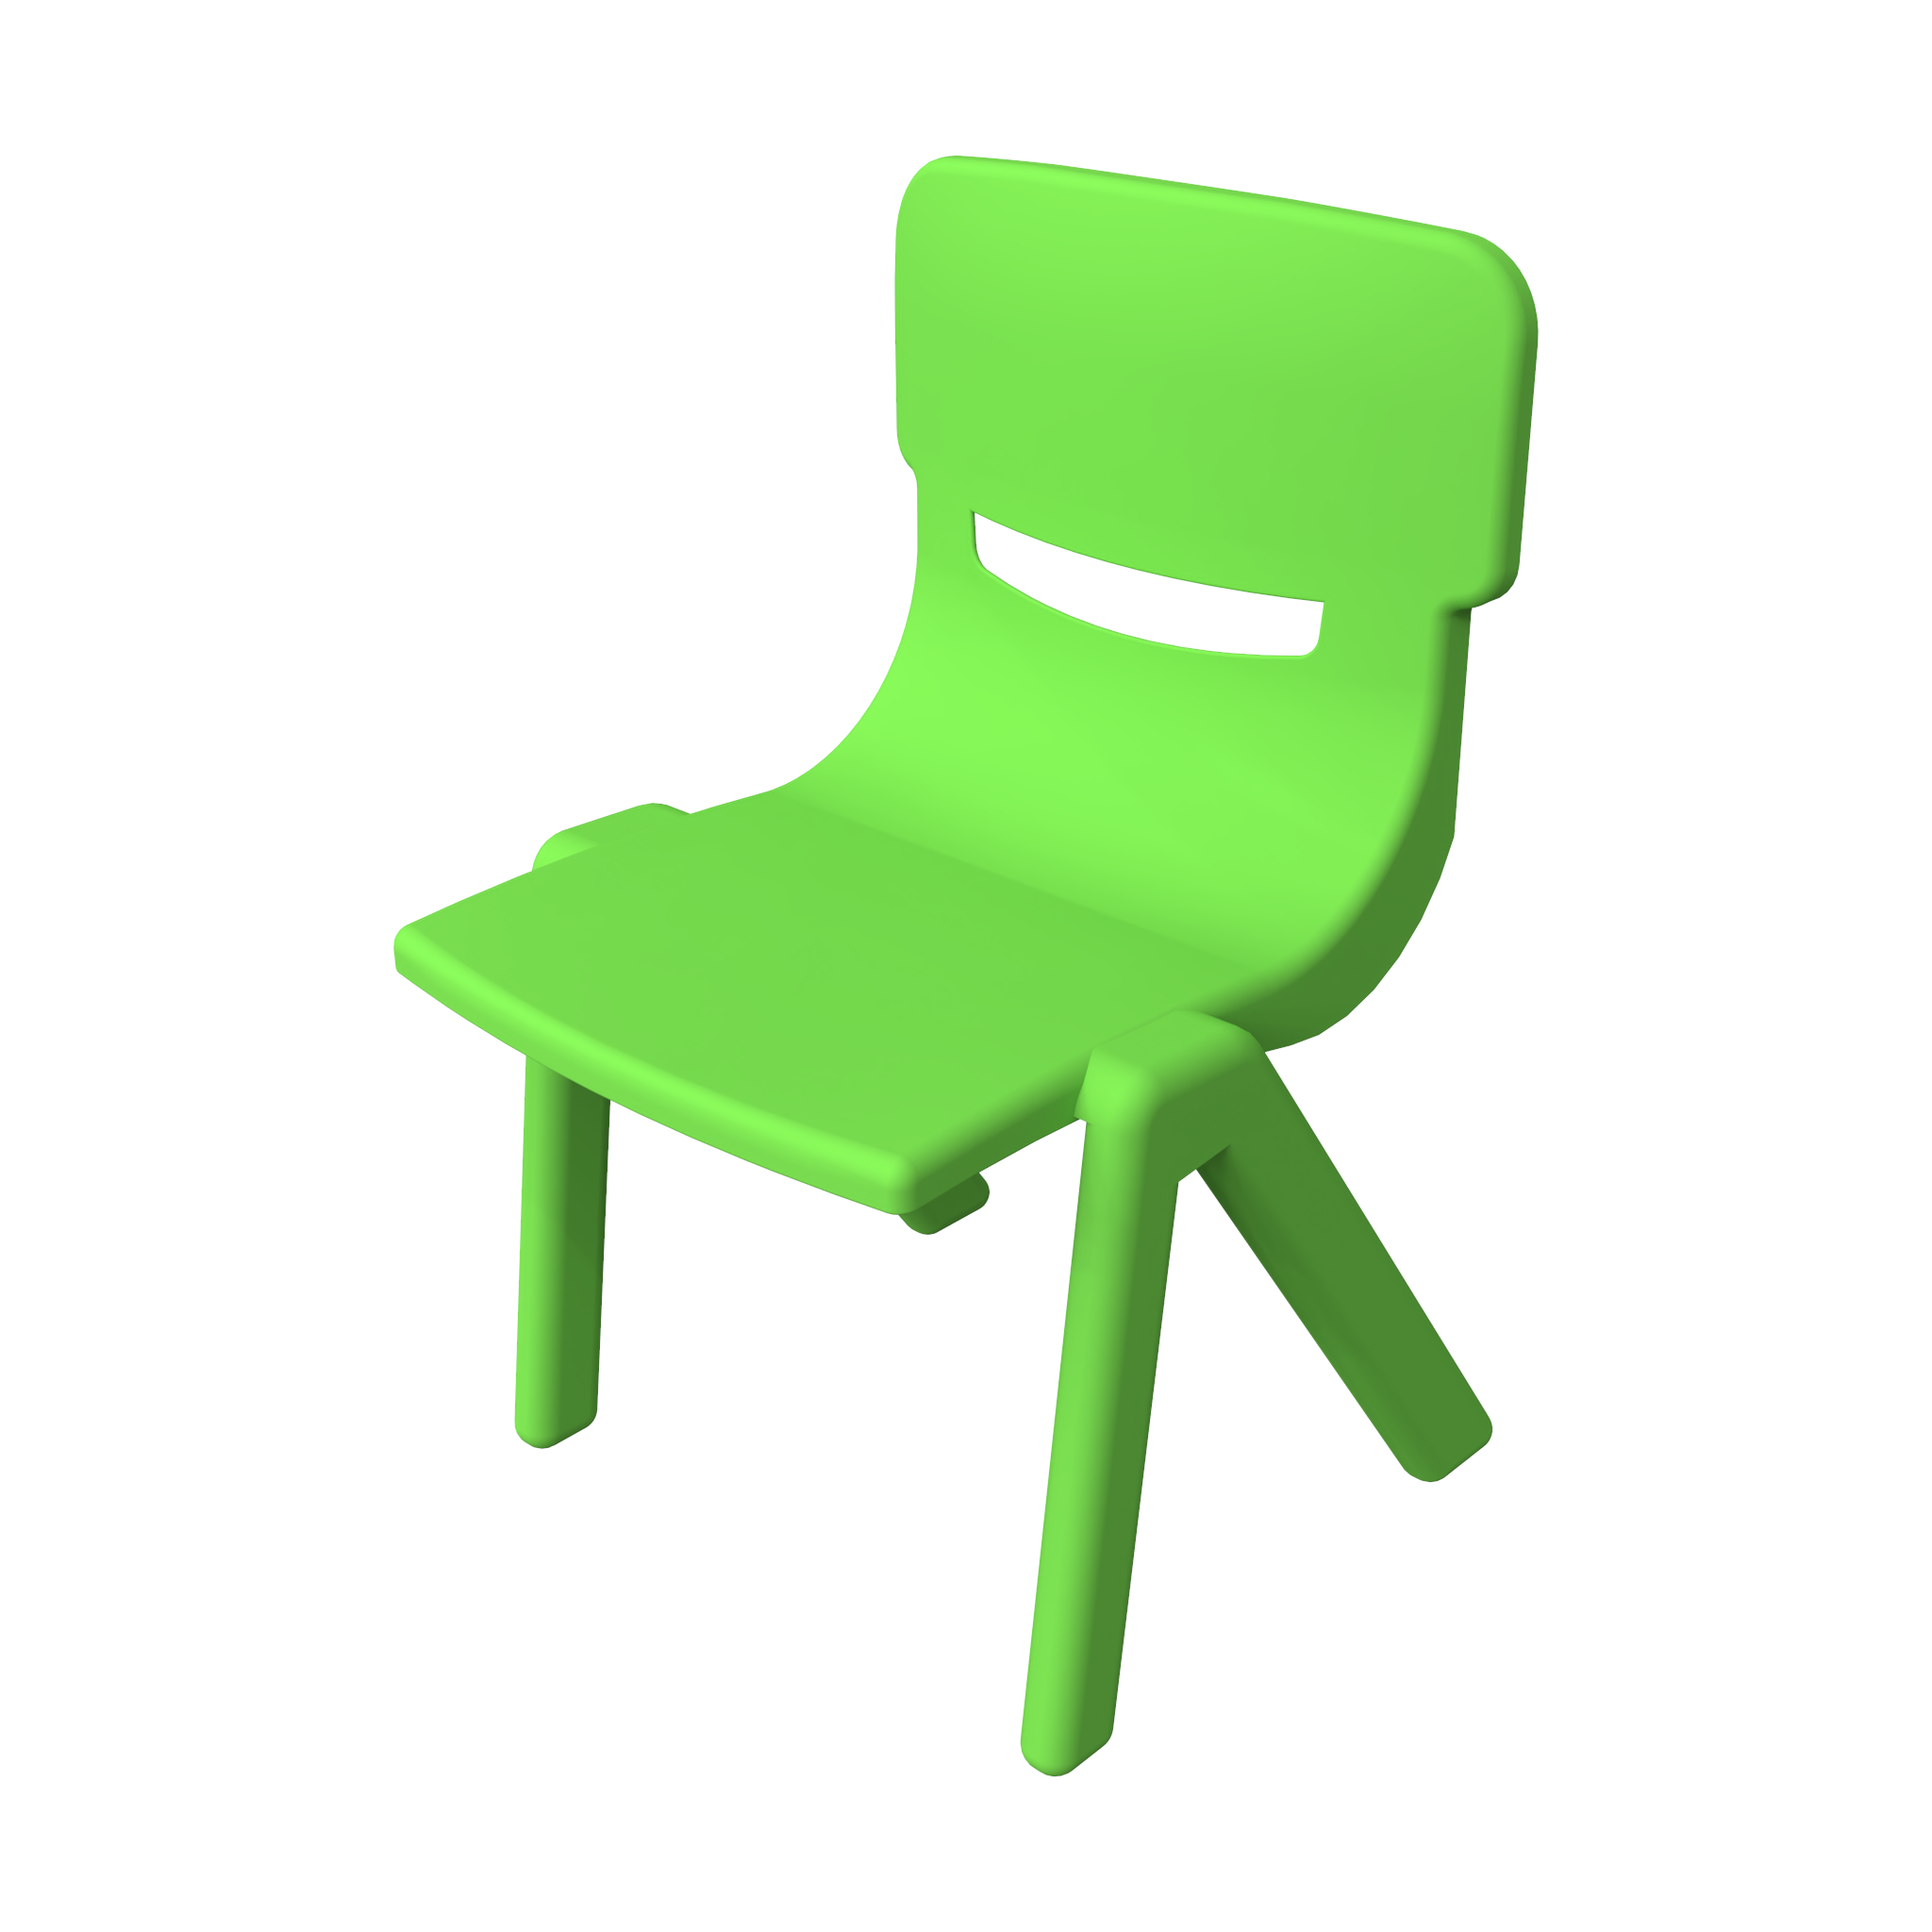 Esta imagen muestra un mobiliario infantil Fun chair Green